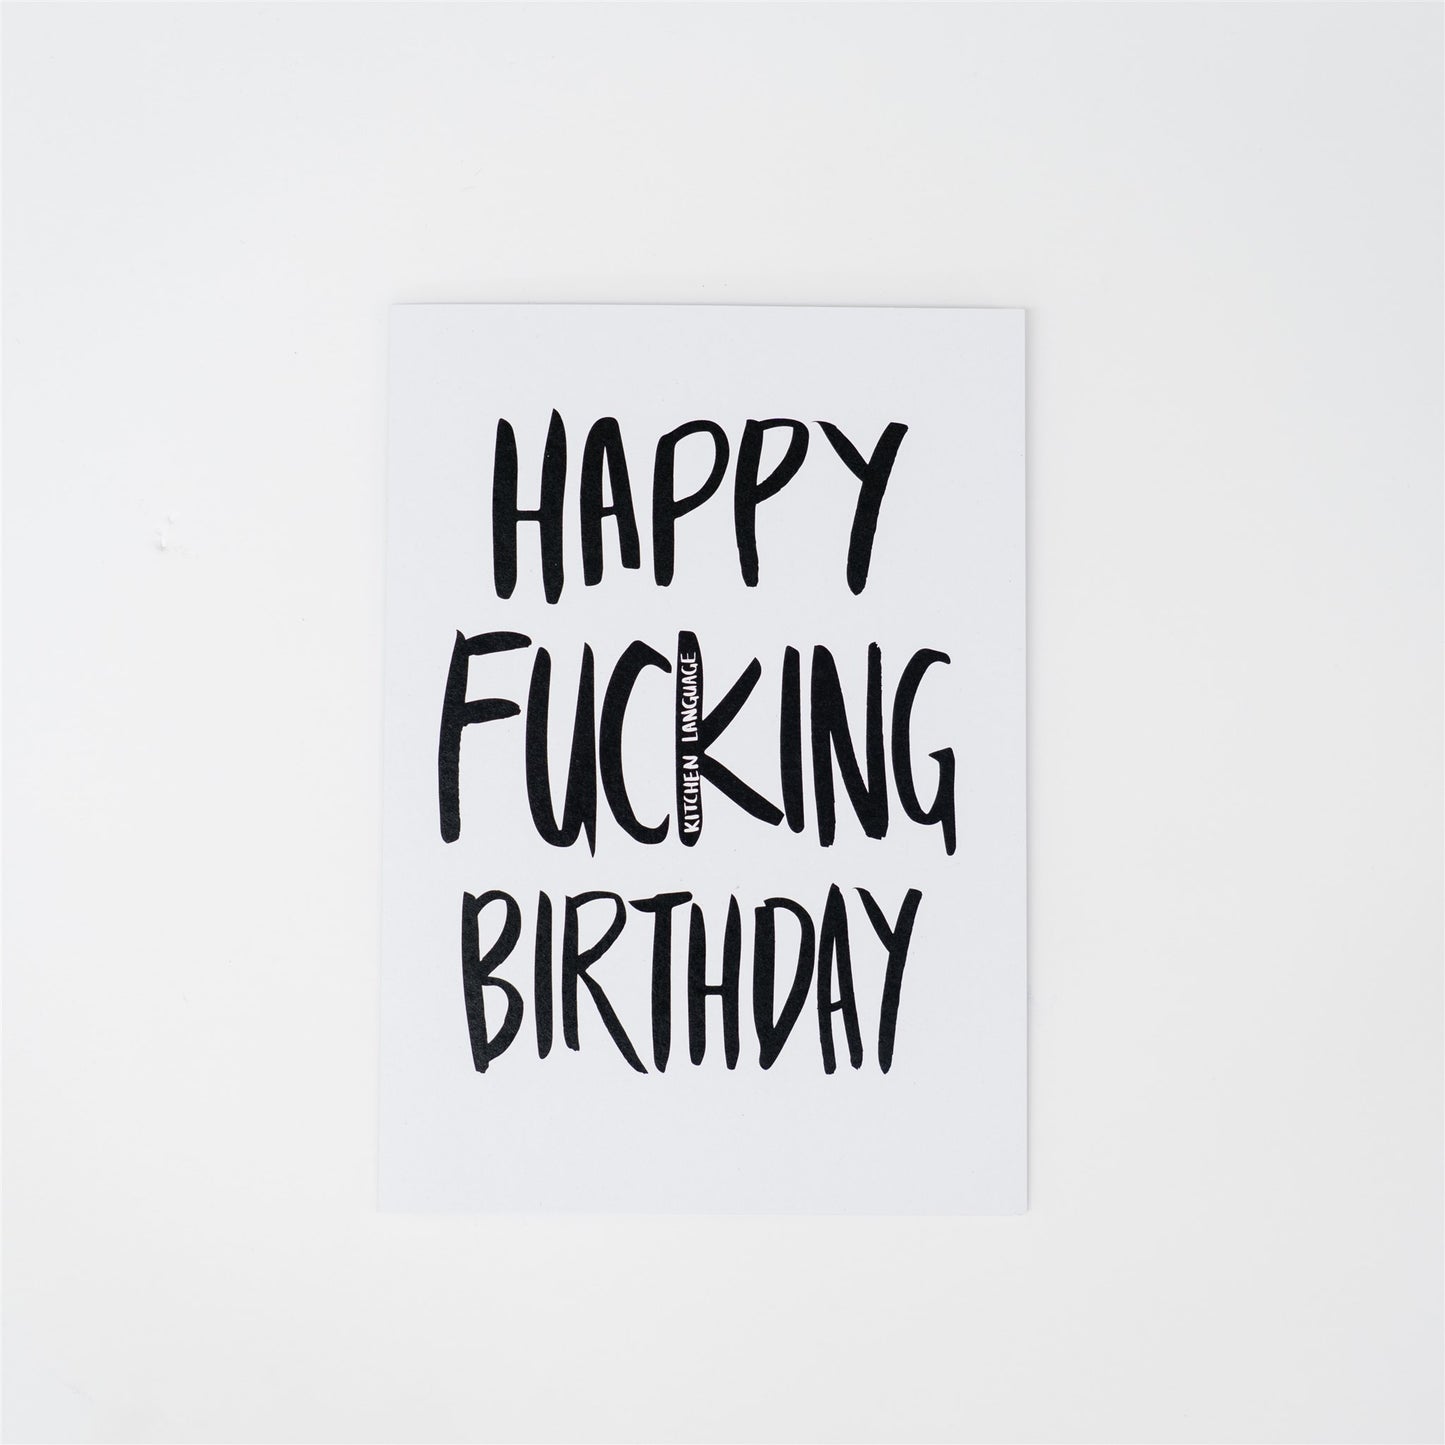 Happy Fucking Birthday - greeting card- kitchen language